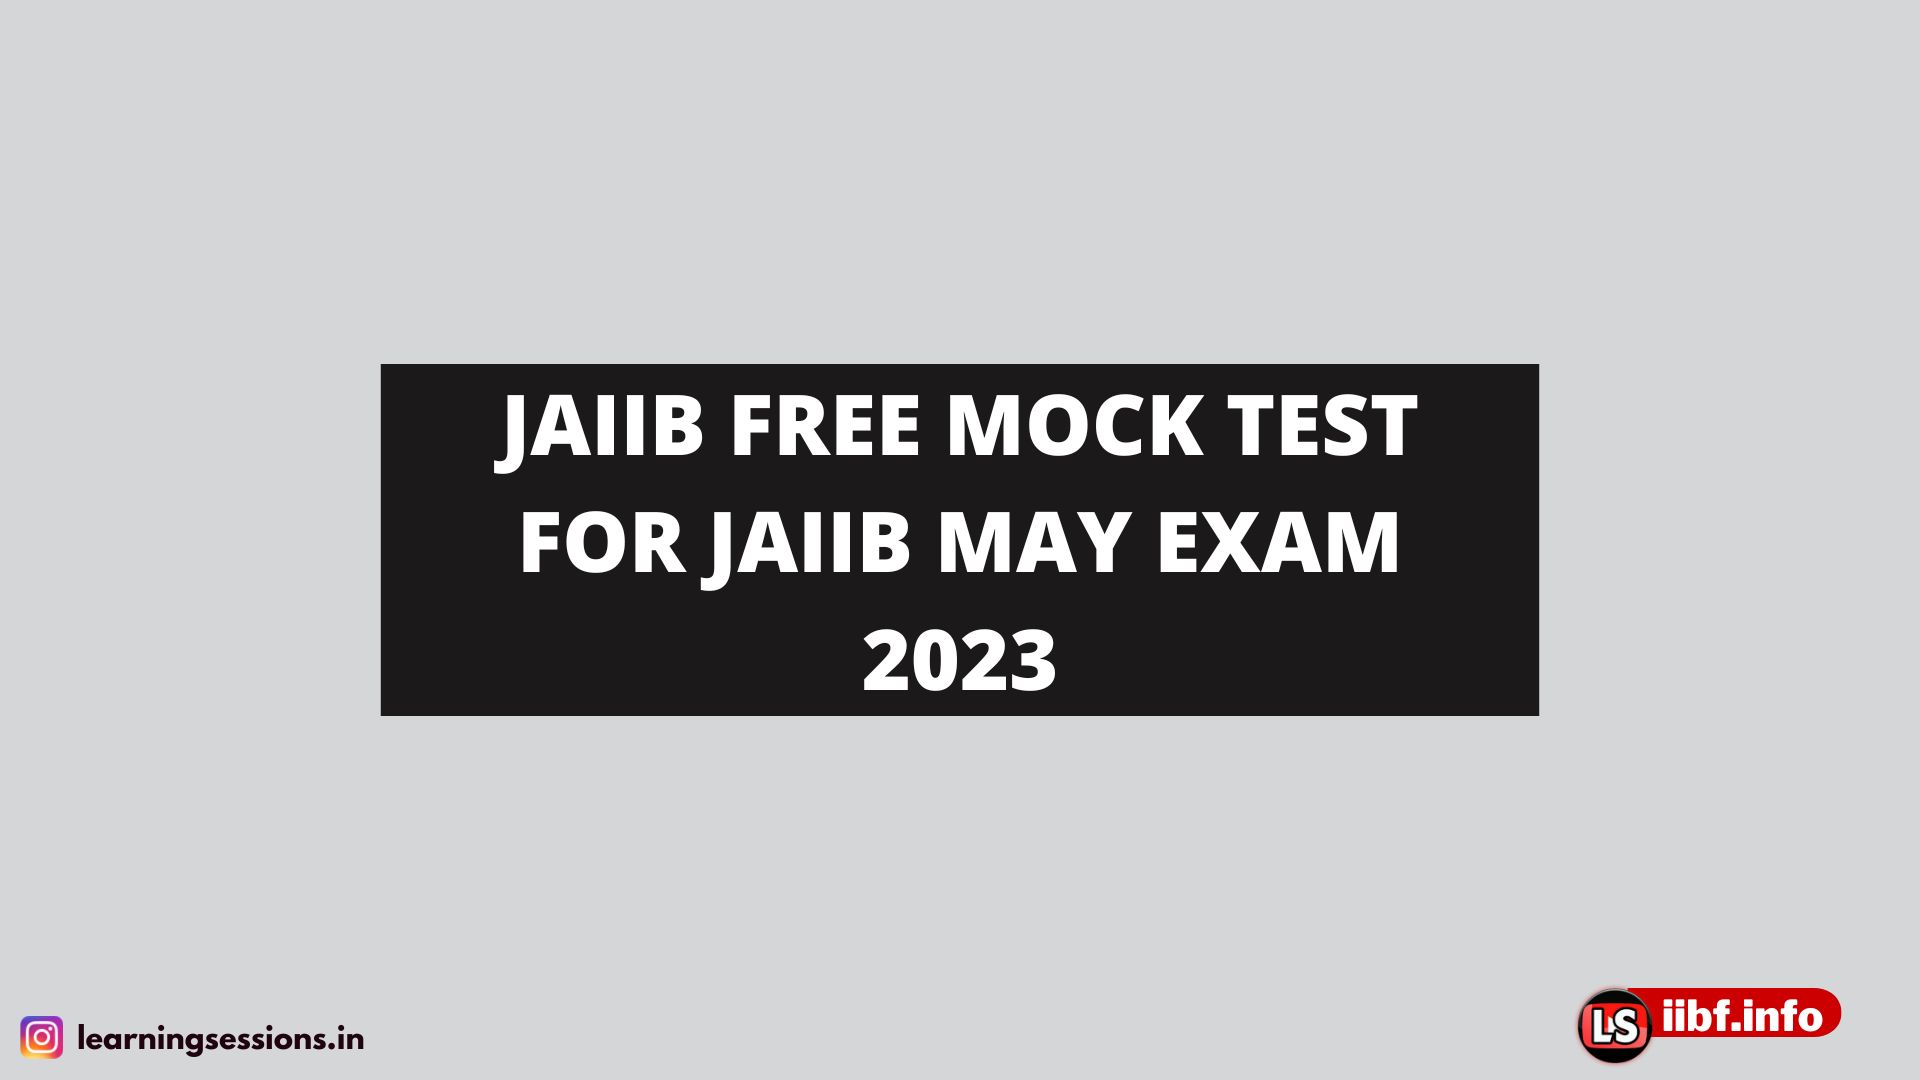 JAIIB FREE MOCK TEST FOR JAIIB MAY EXAM 2023